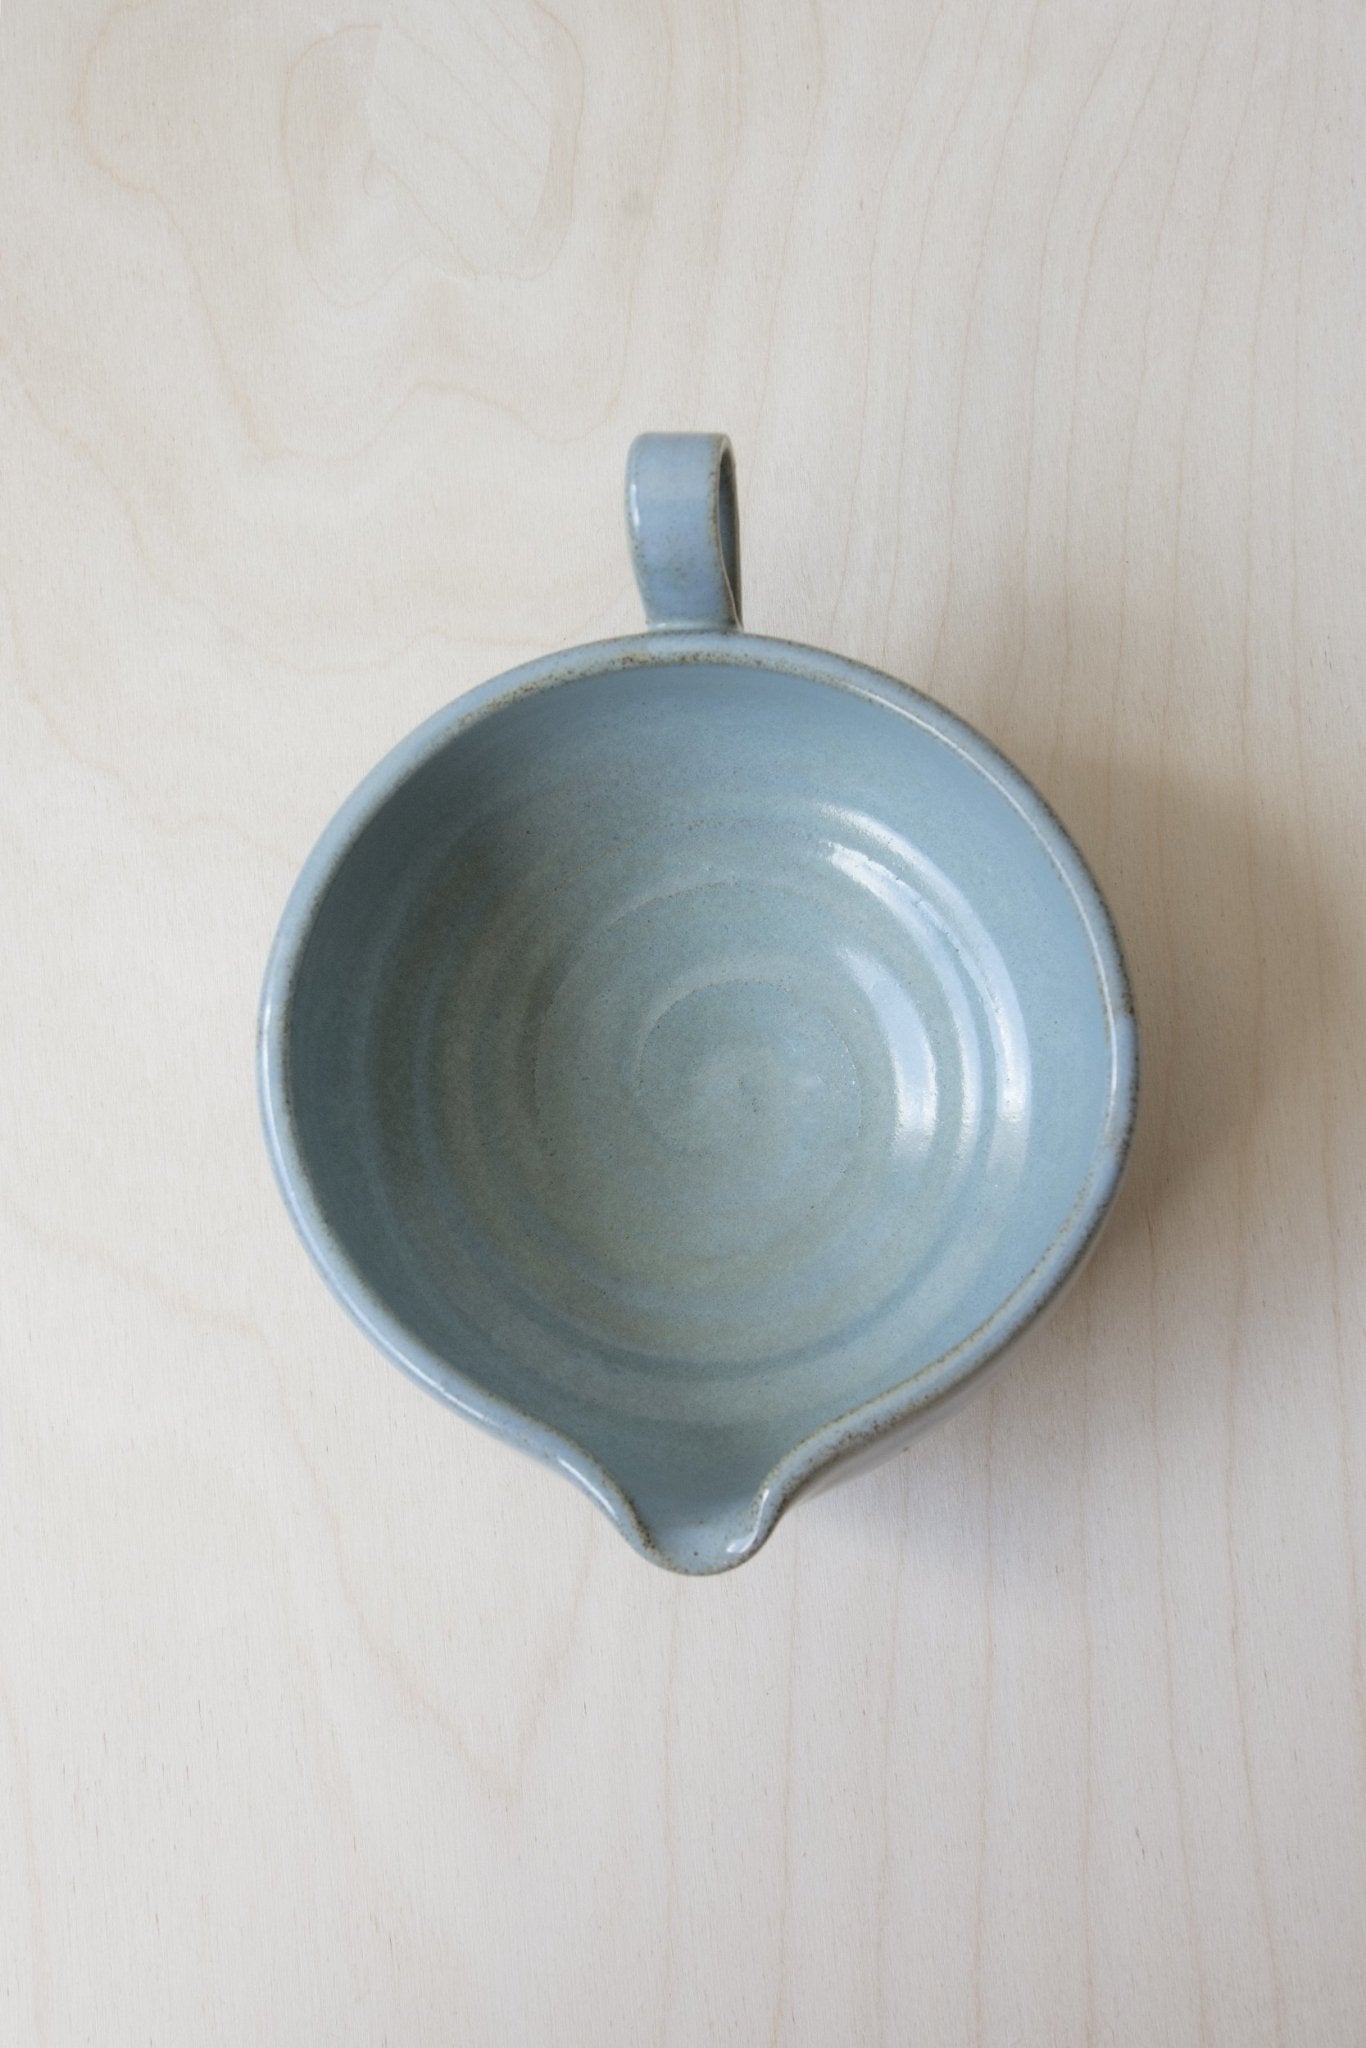 Light Blue Ceramic Batter Bowl - Mad About Pottery - Bowl